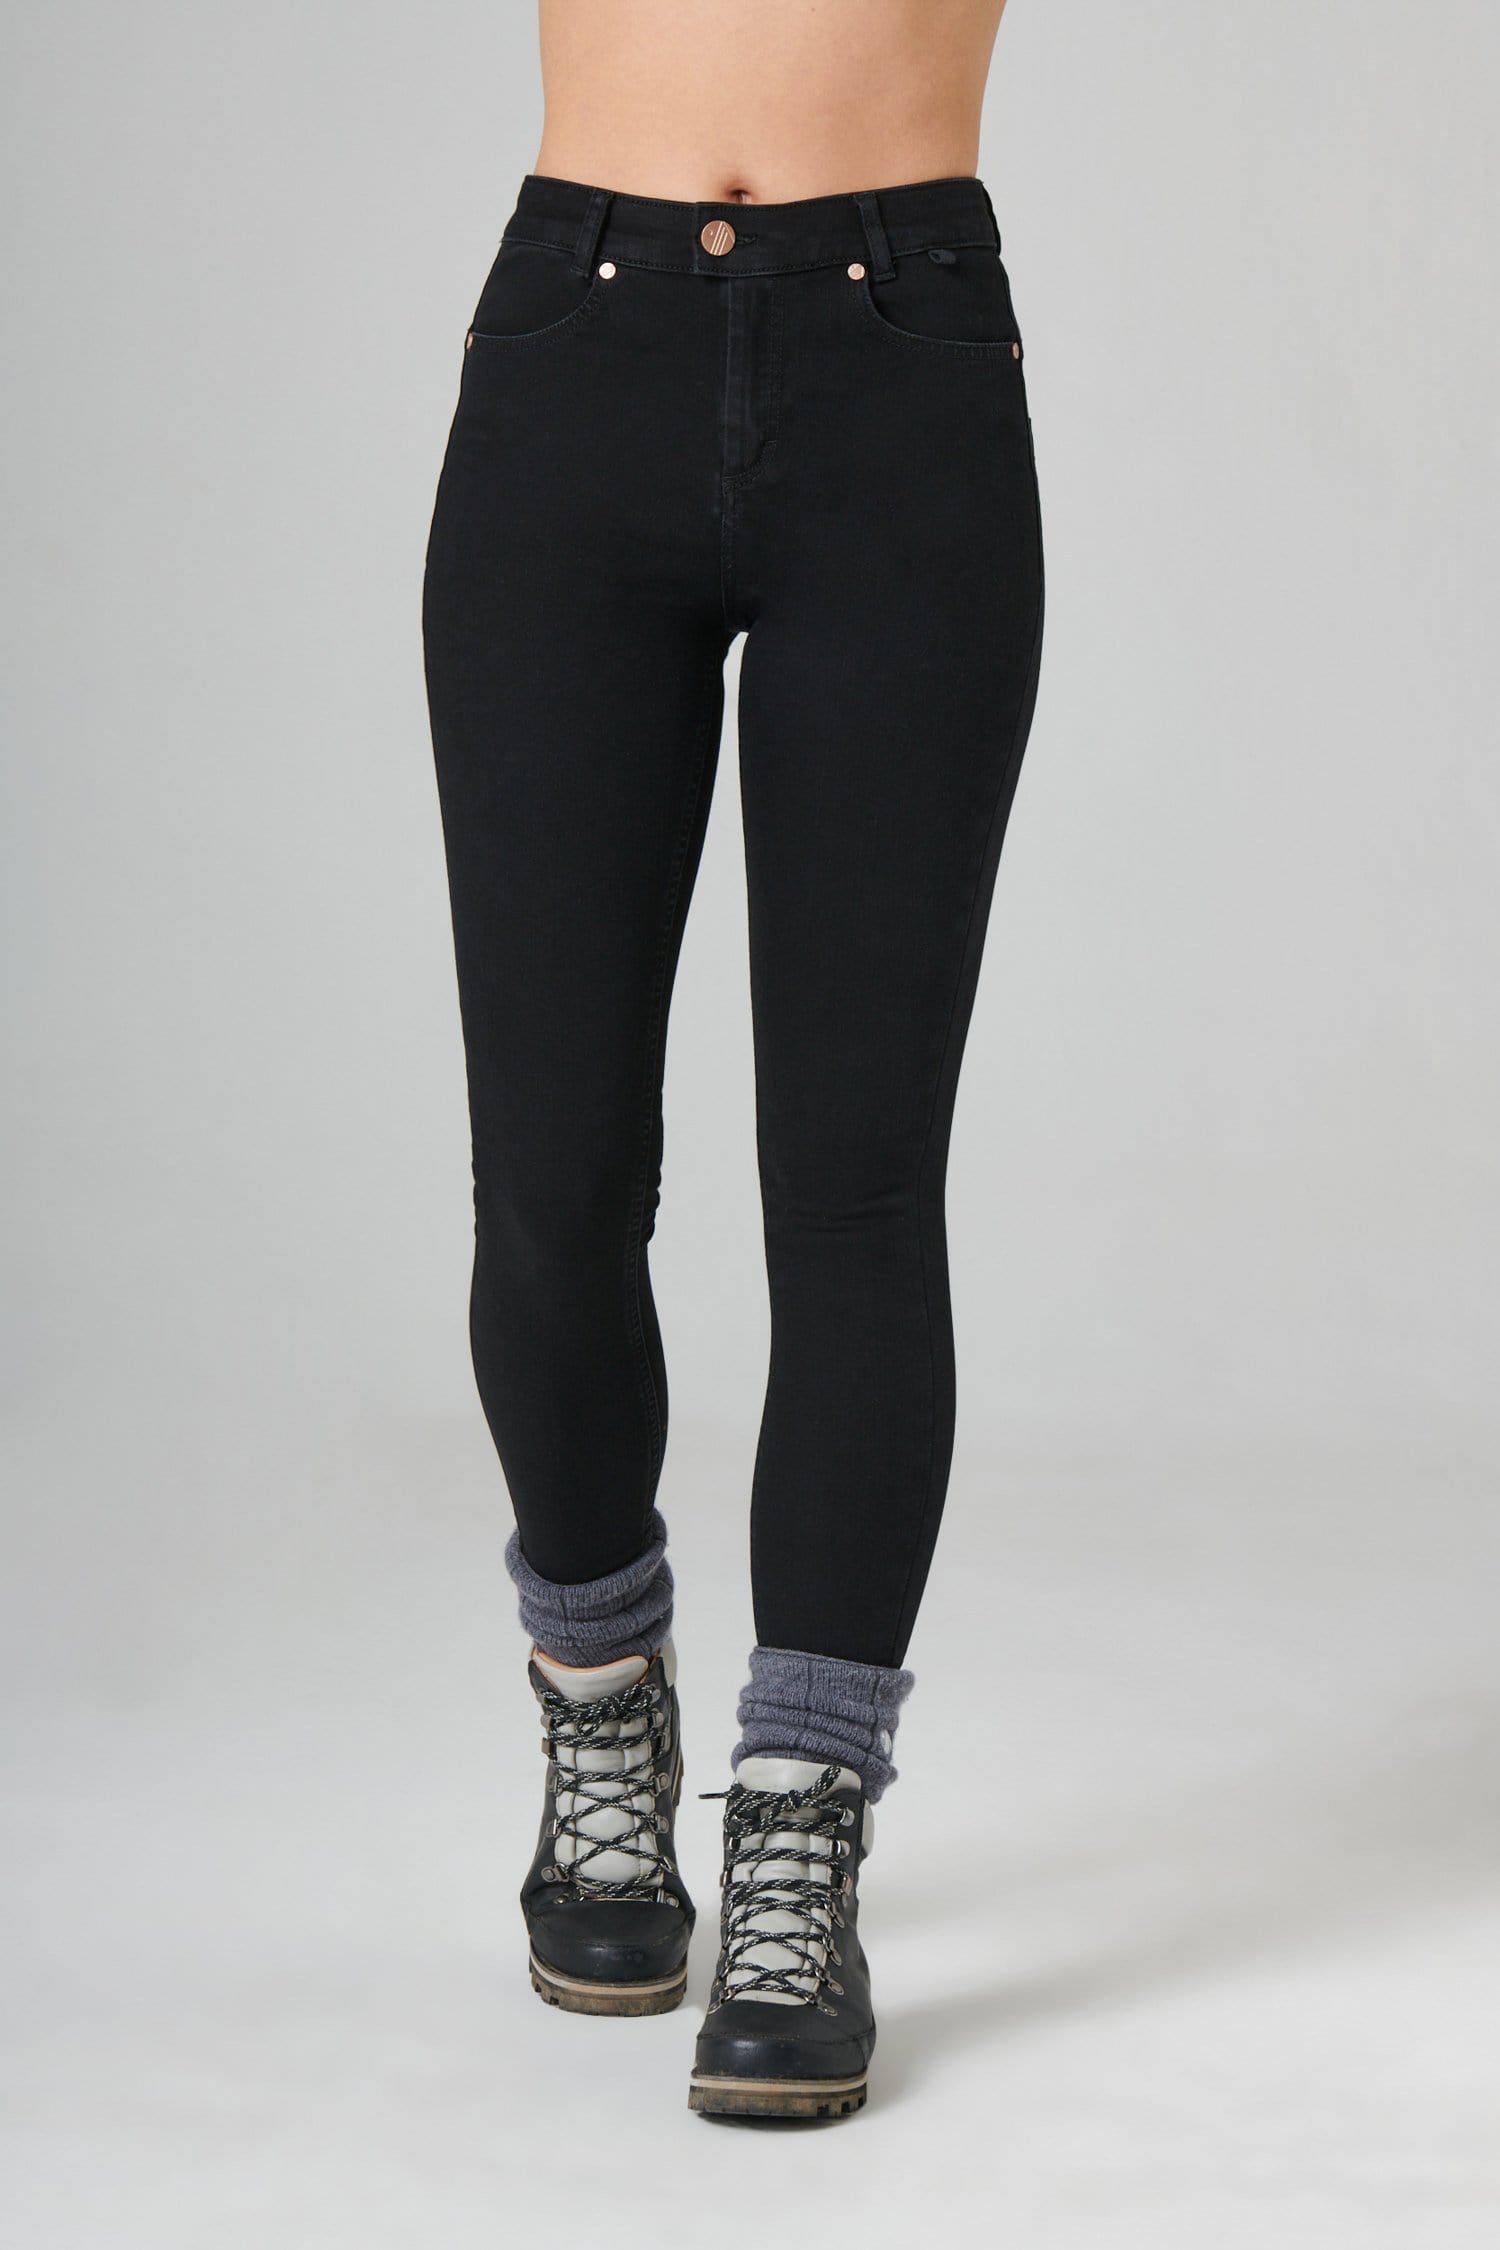 The Skinny Outdoor Jeans - Black Denim - 34p / Uk16 - Womens - Acai Outdoorwear